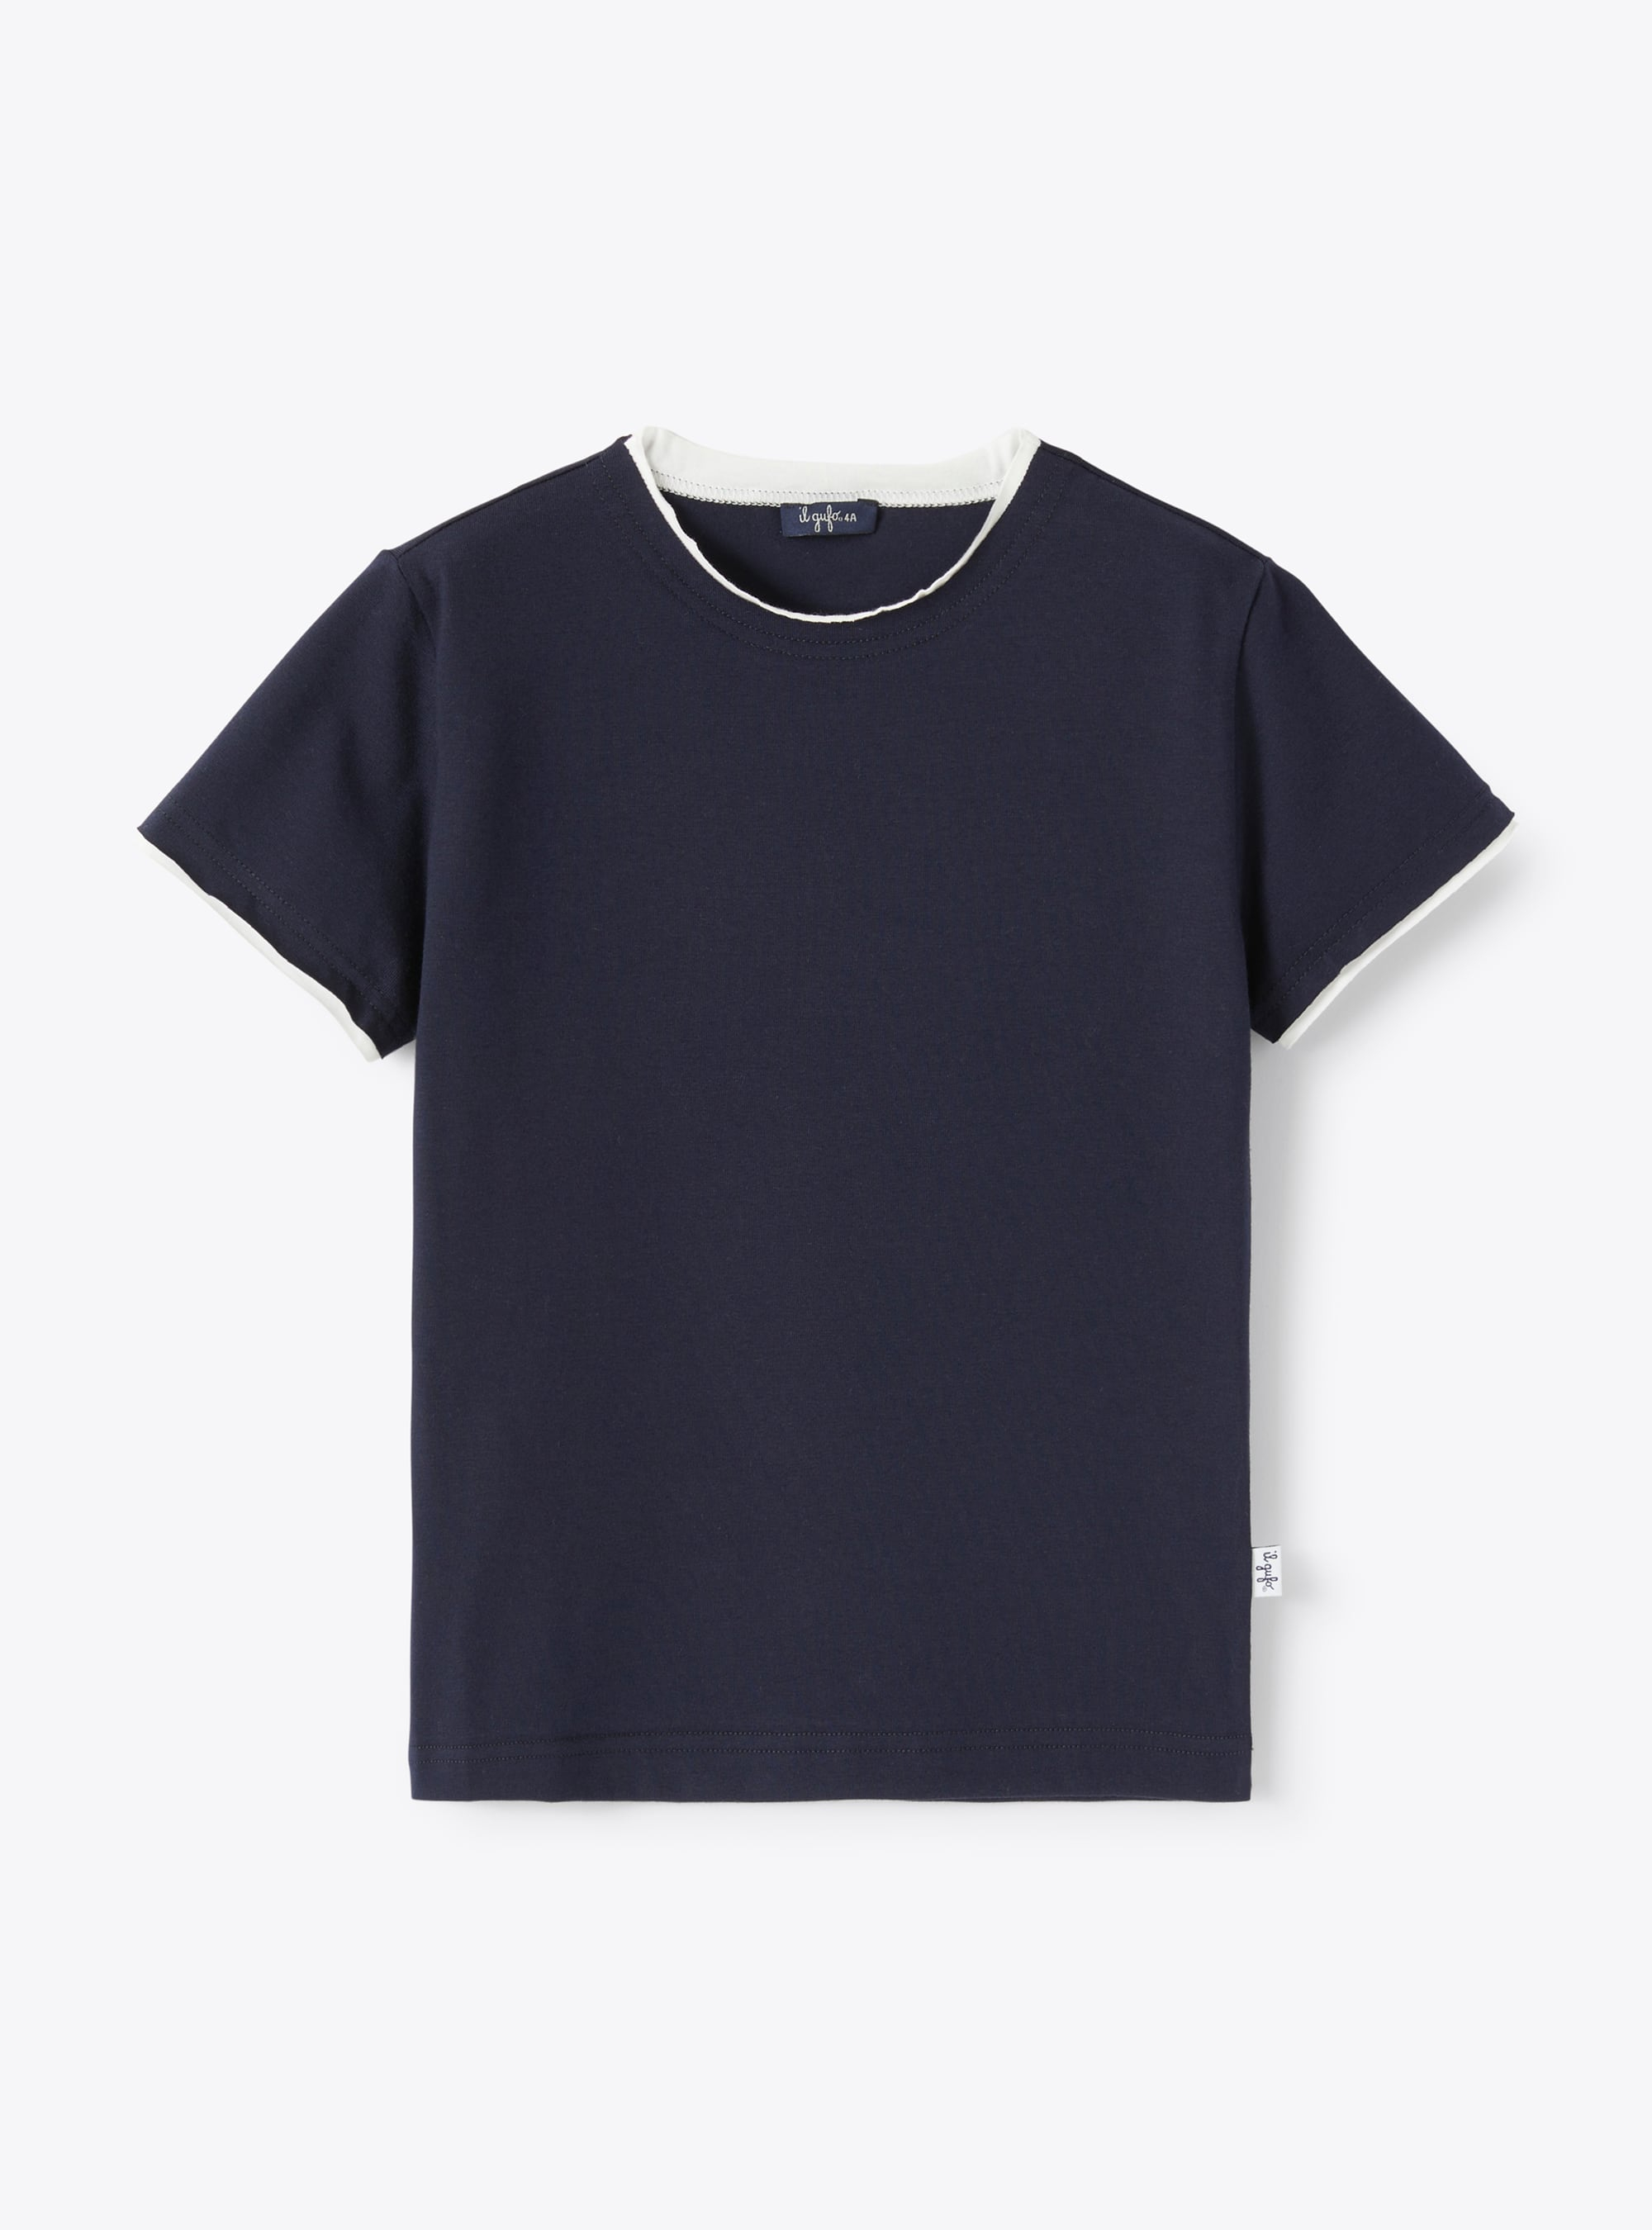 Blue t-shirt with white trim - T-shirts - Il Gufo